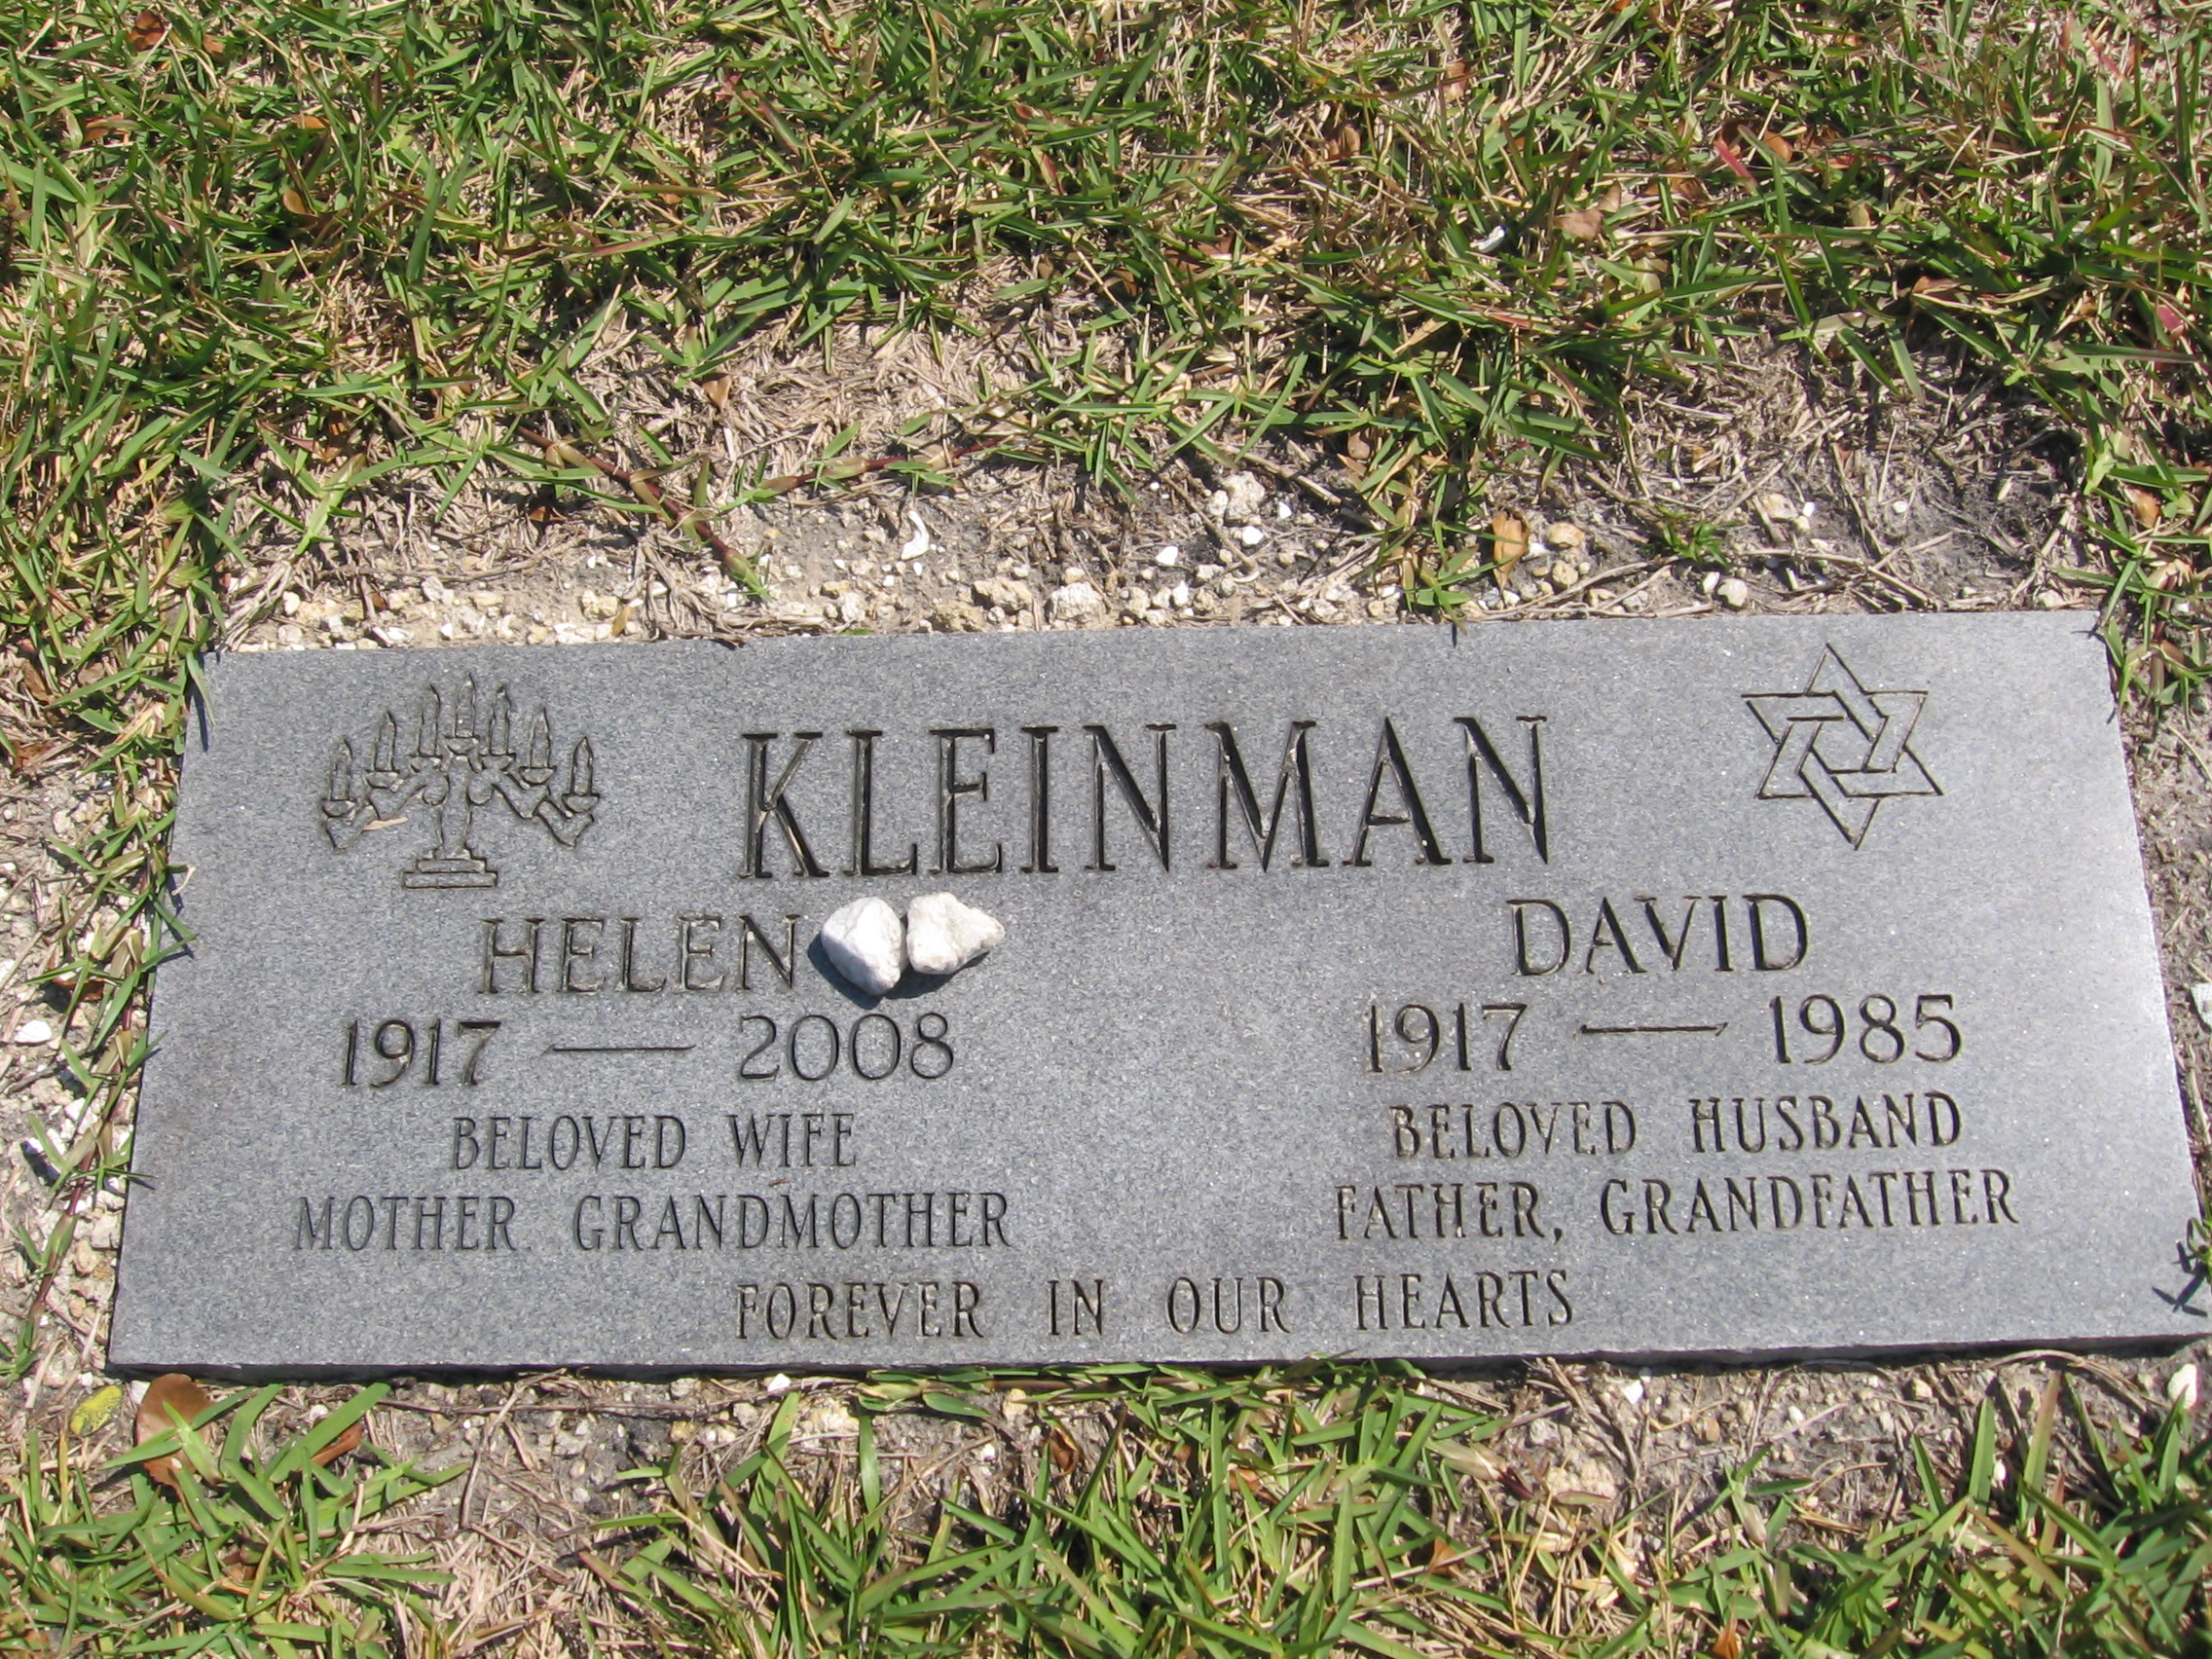 David Kleinman